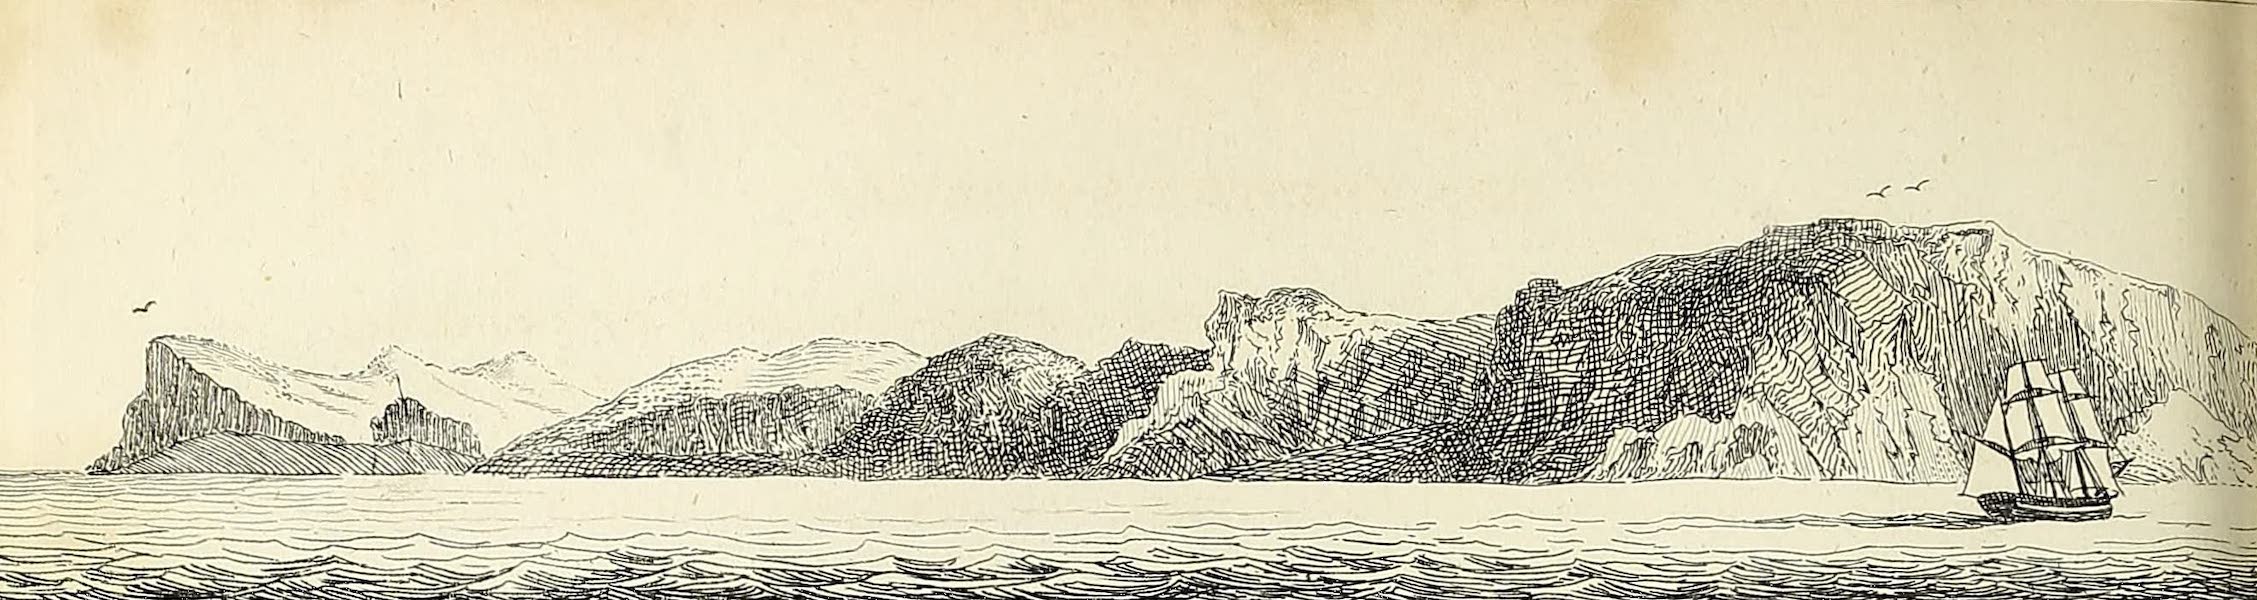 Cape Bathurst to Cape Byam Martin S. 11&176; E.